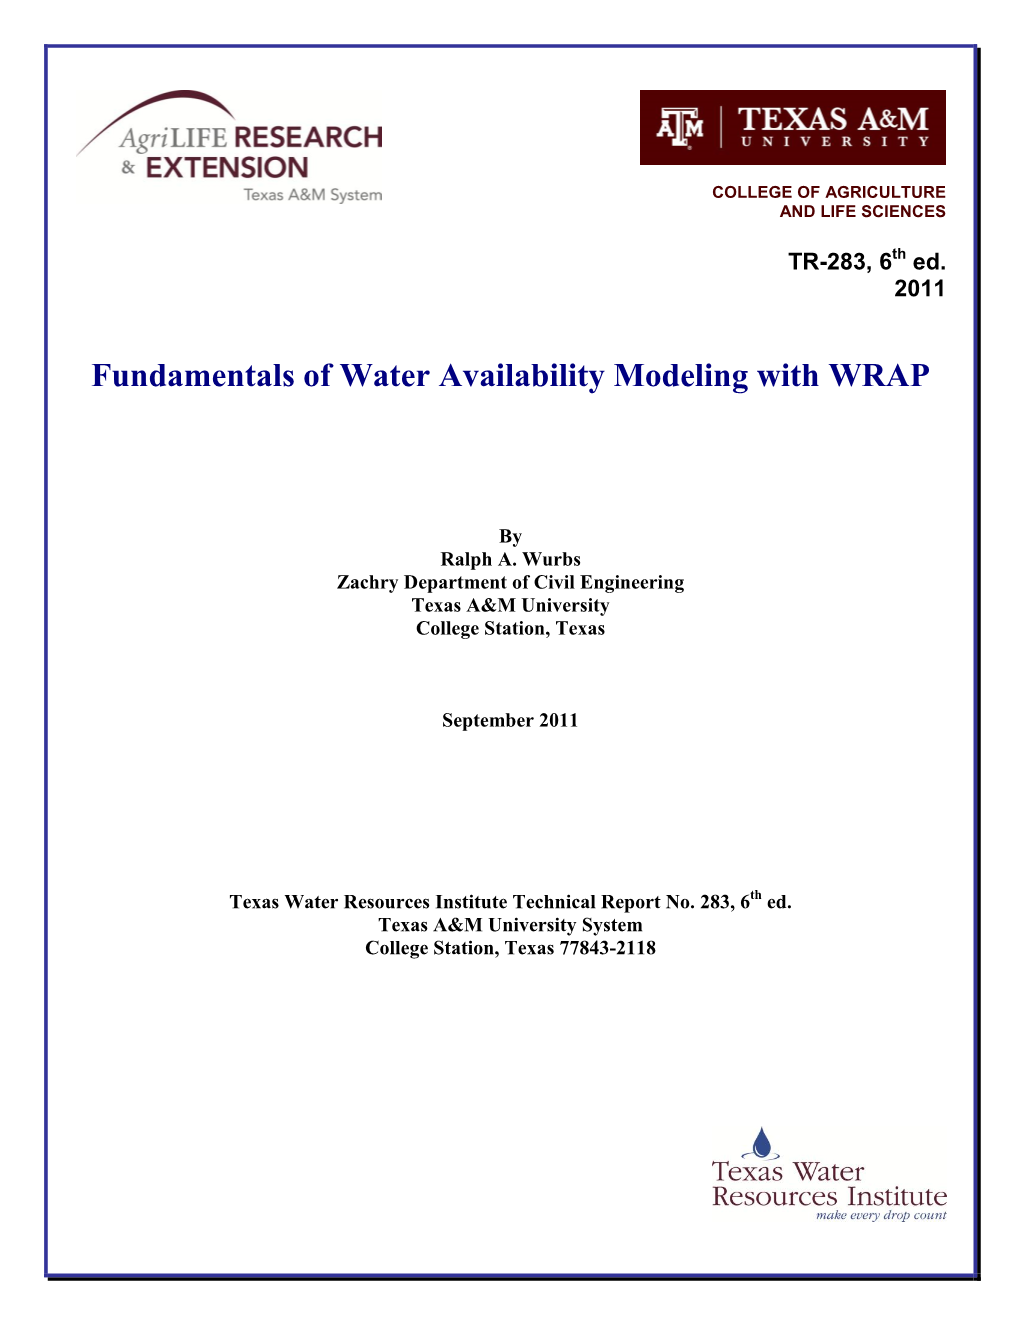 WRAP Fundamentals Manual